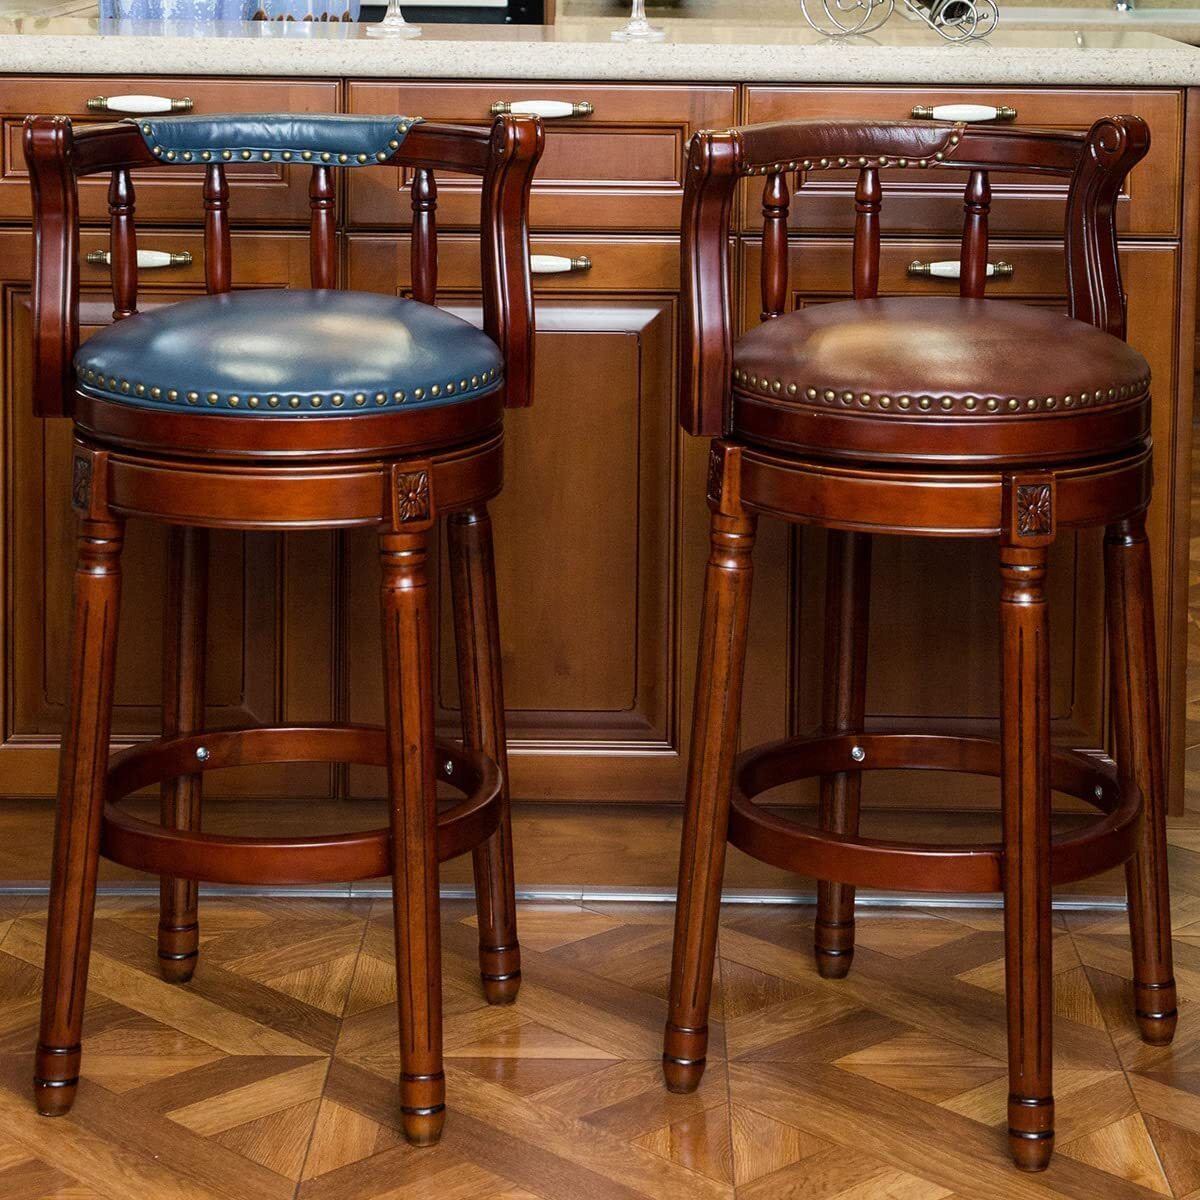 Vintage swivel bar stools with backs